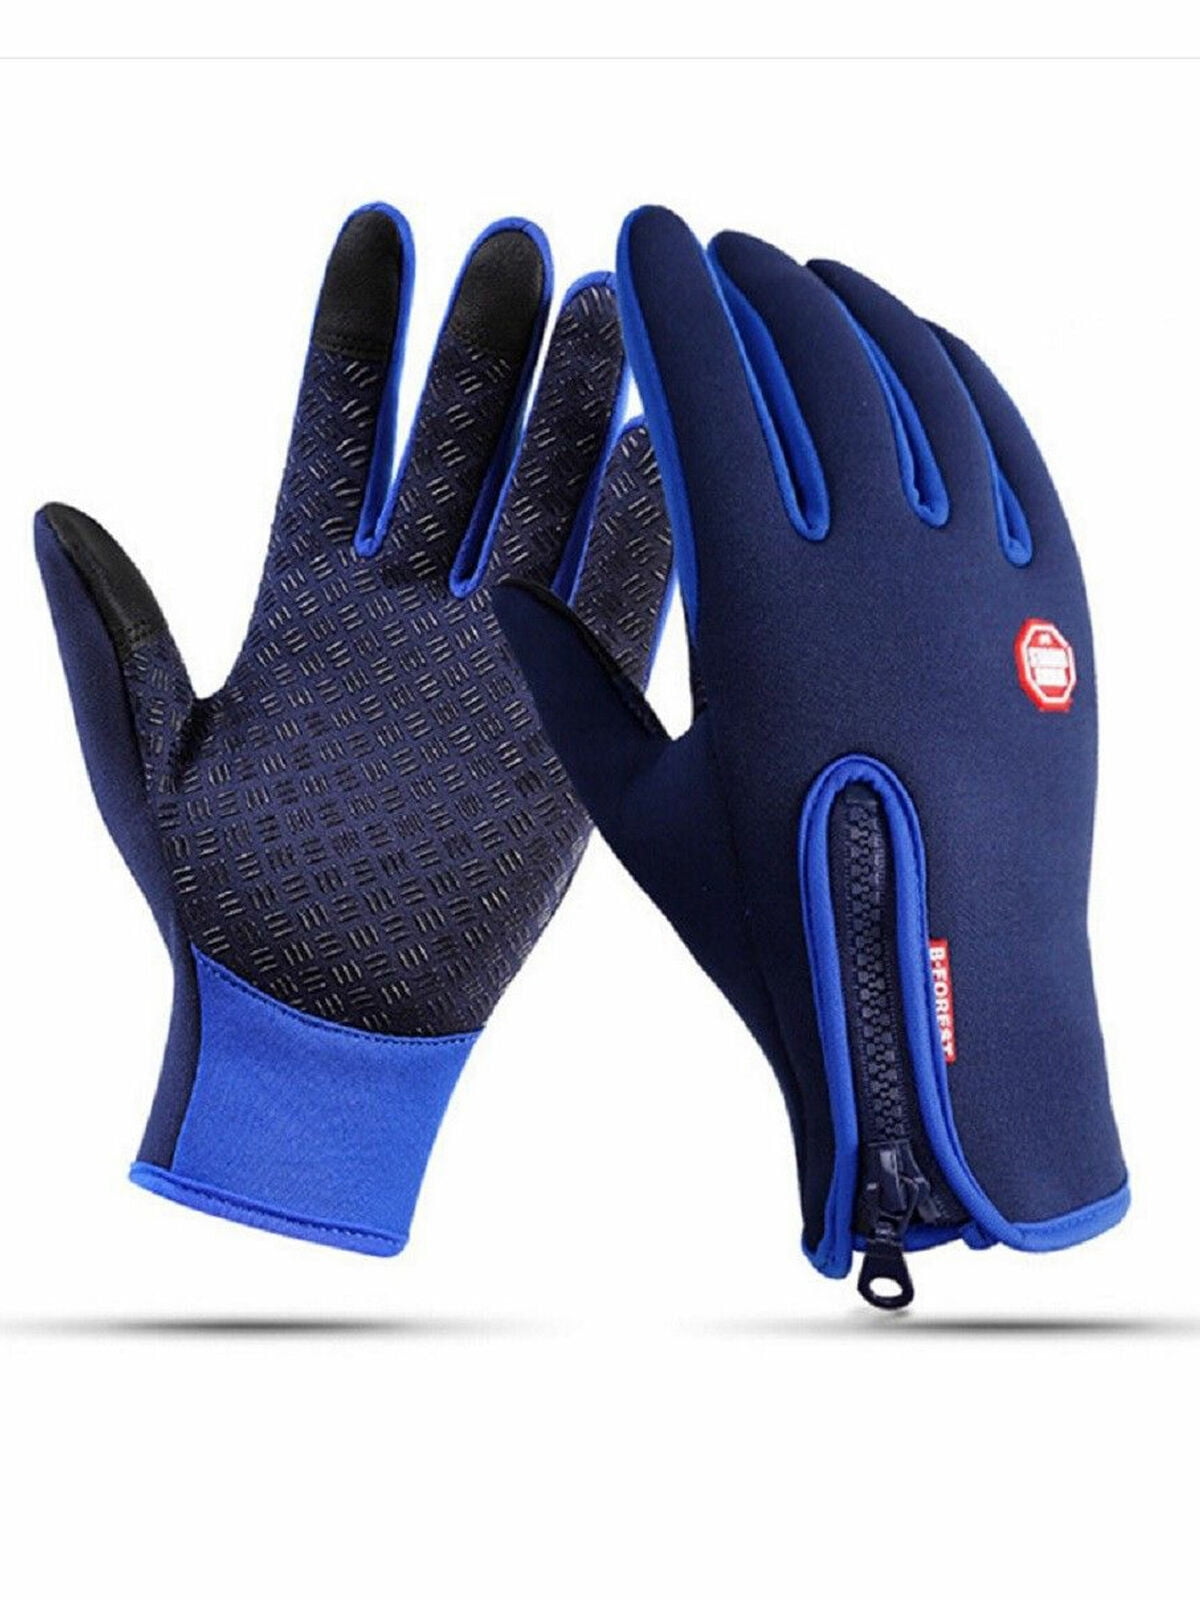 Winter Sports Neoprene Windproof Waterproof Ski Cycling Screen Thermal Gloves UA 